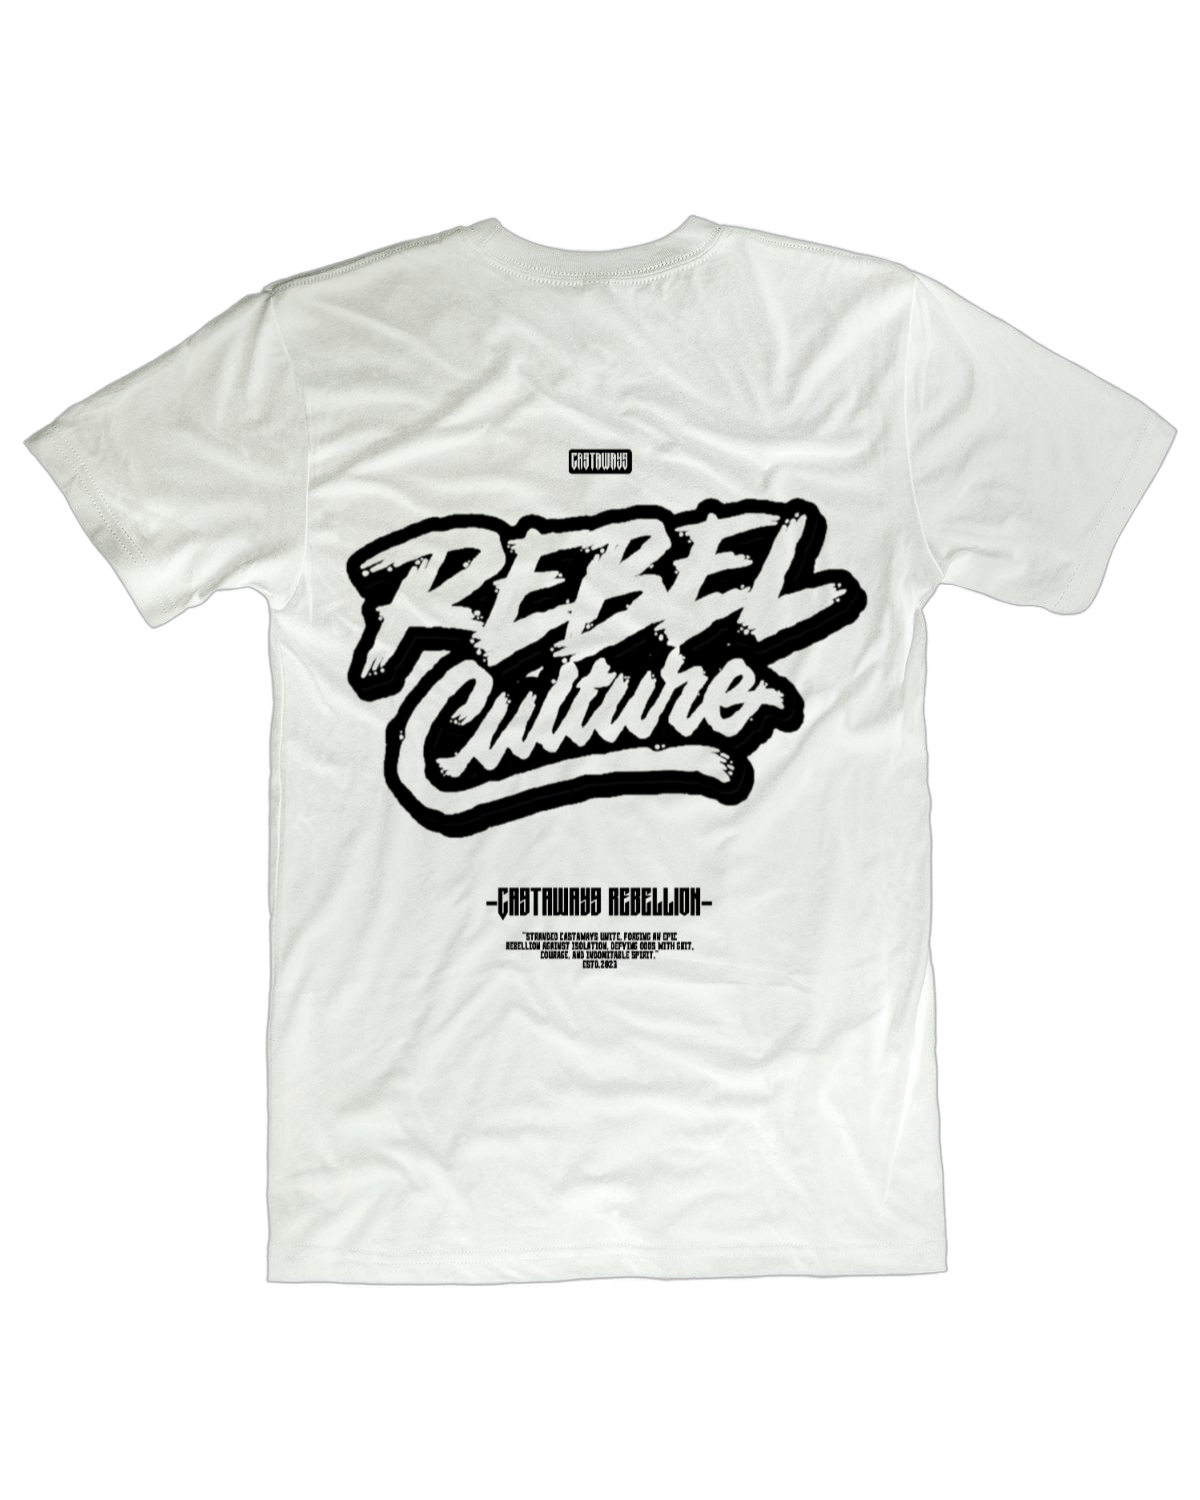 'Rebel culture' graphic tee